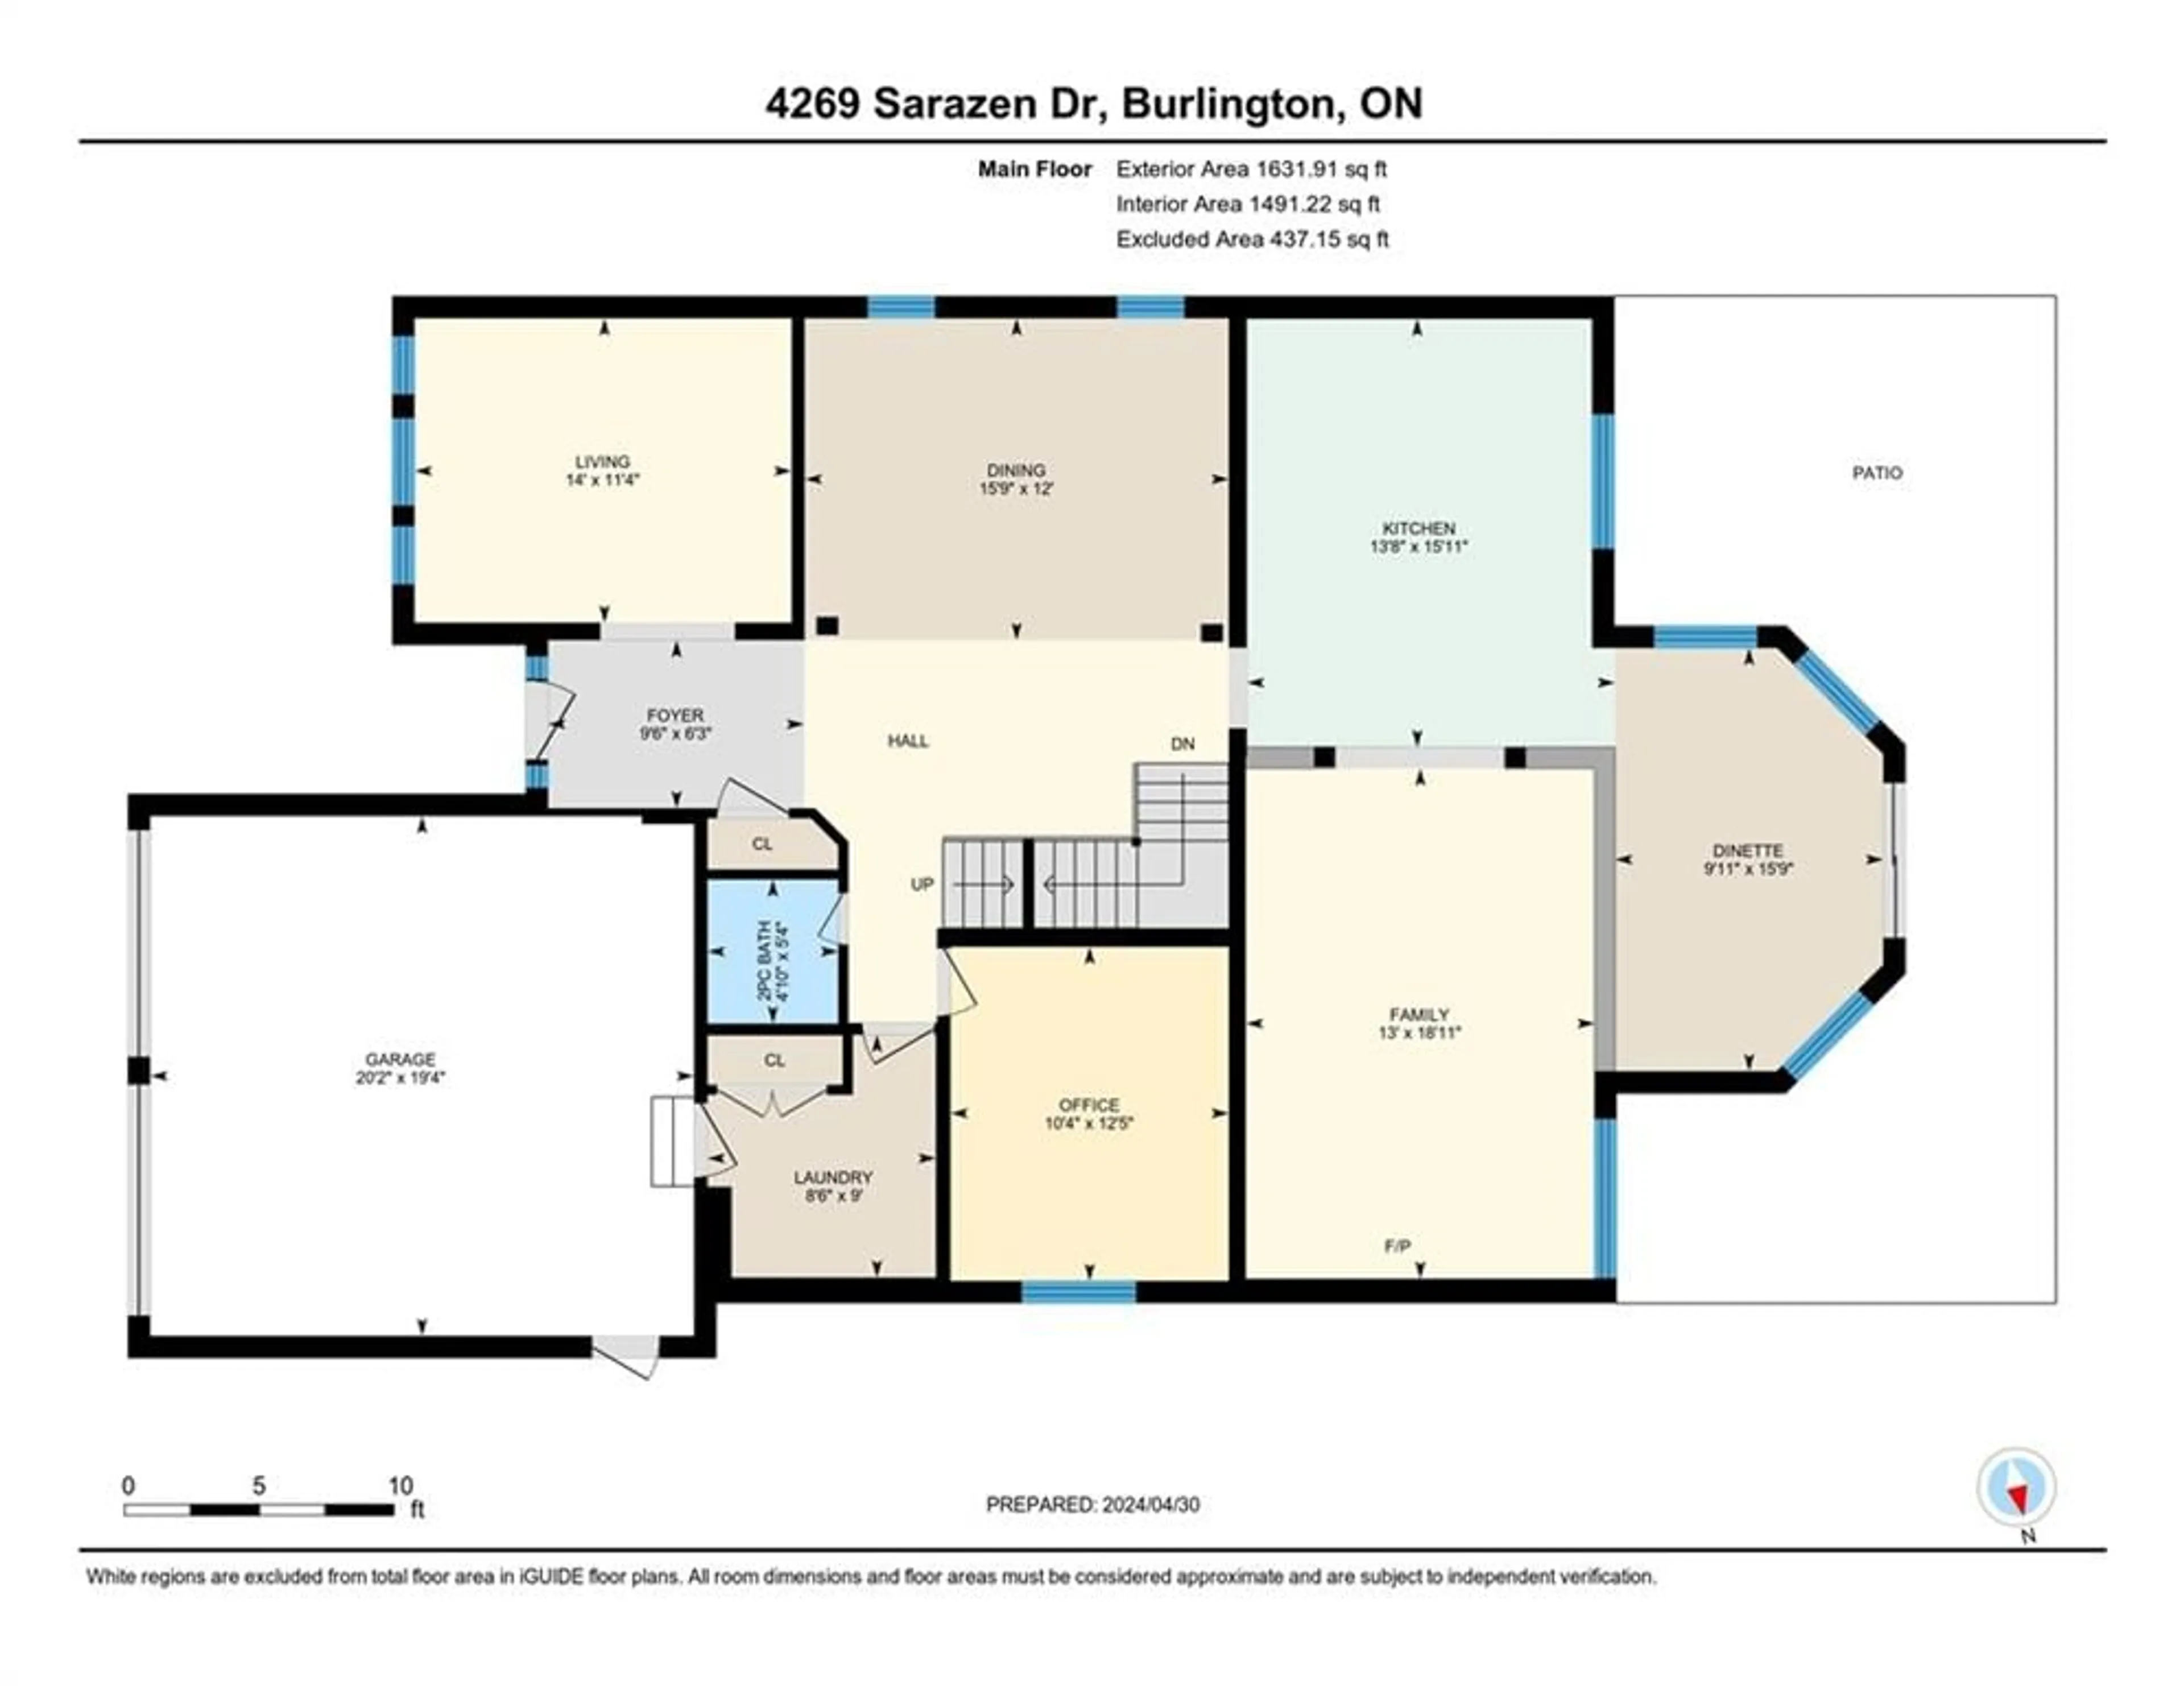 Floor plan for 4269 Sarazen Dr, Burlington Ontario L7M 4Z2